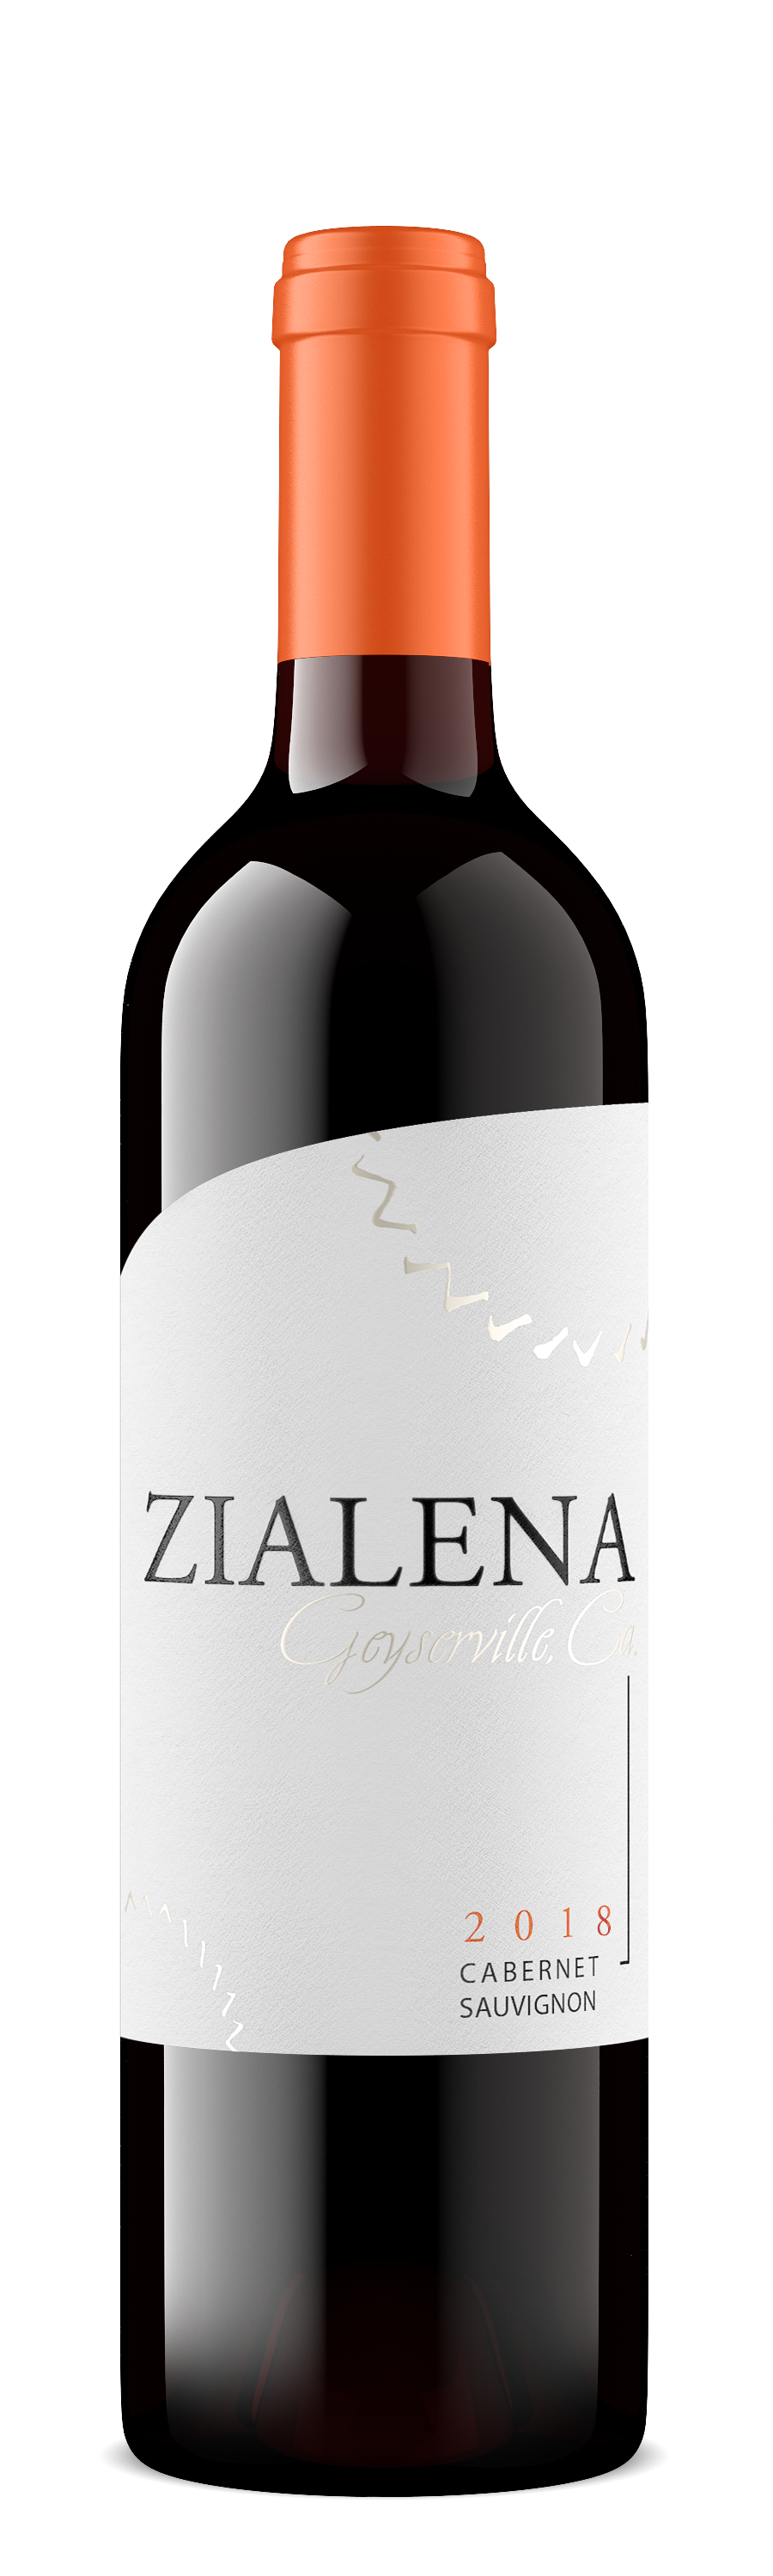 Zialena - Store Winery